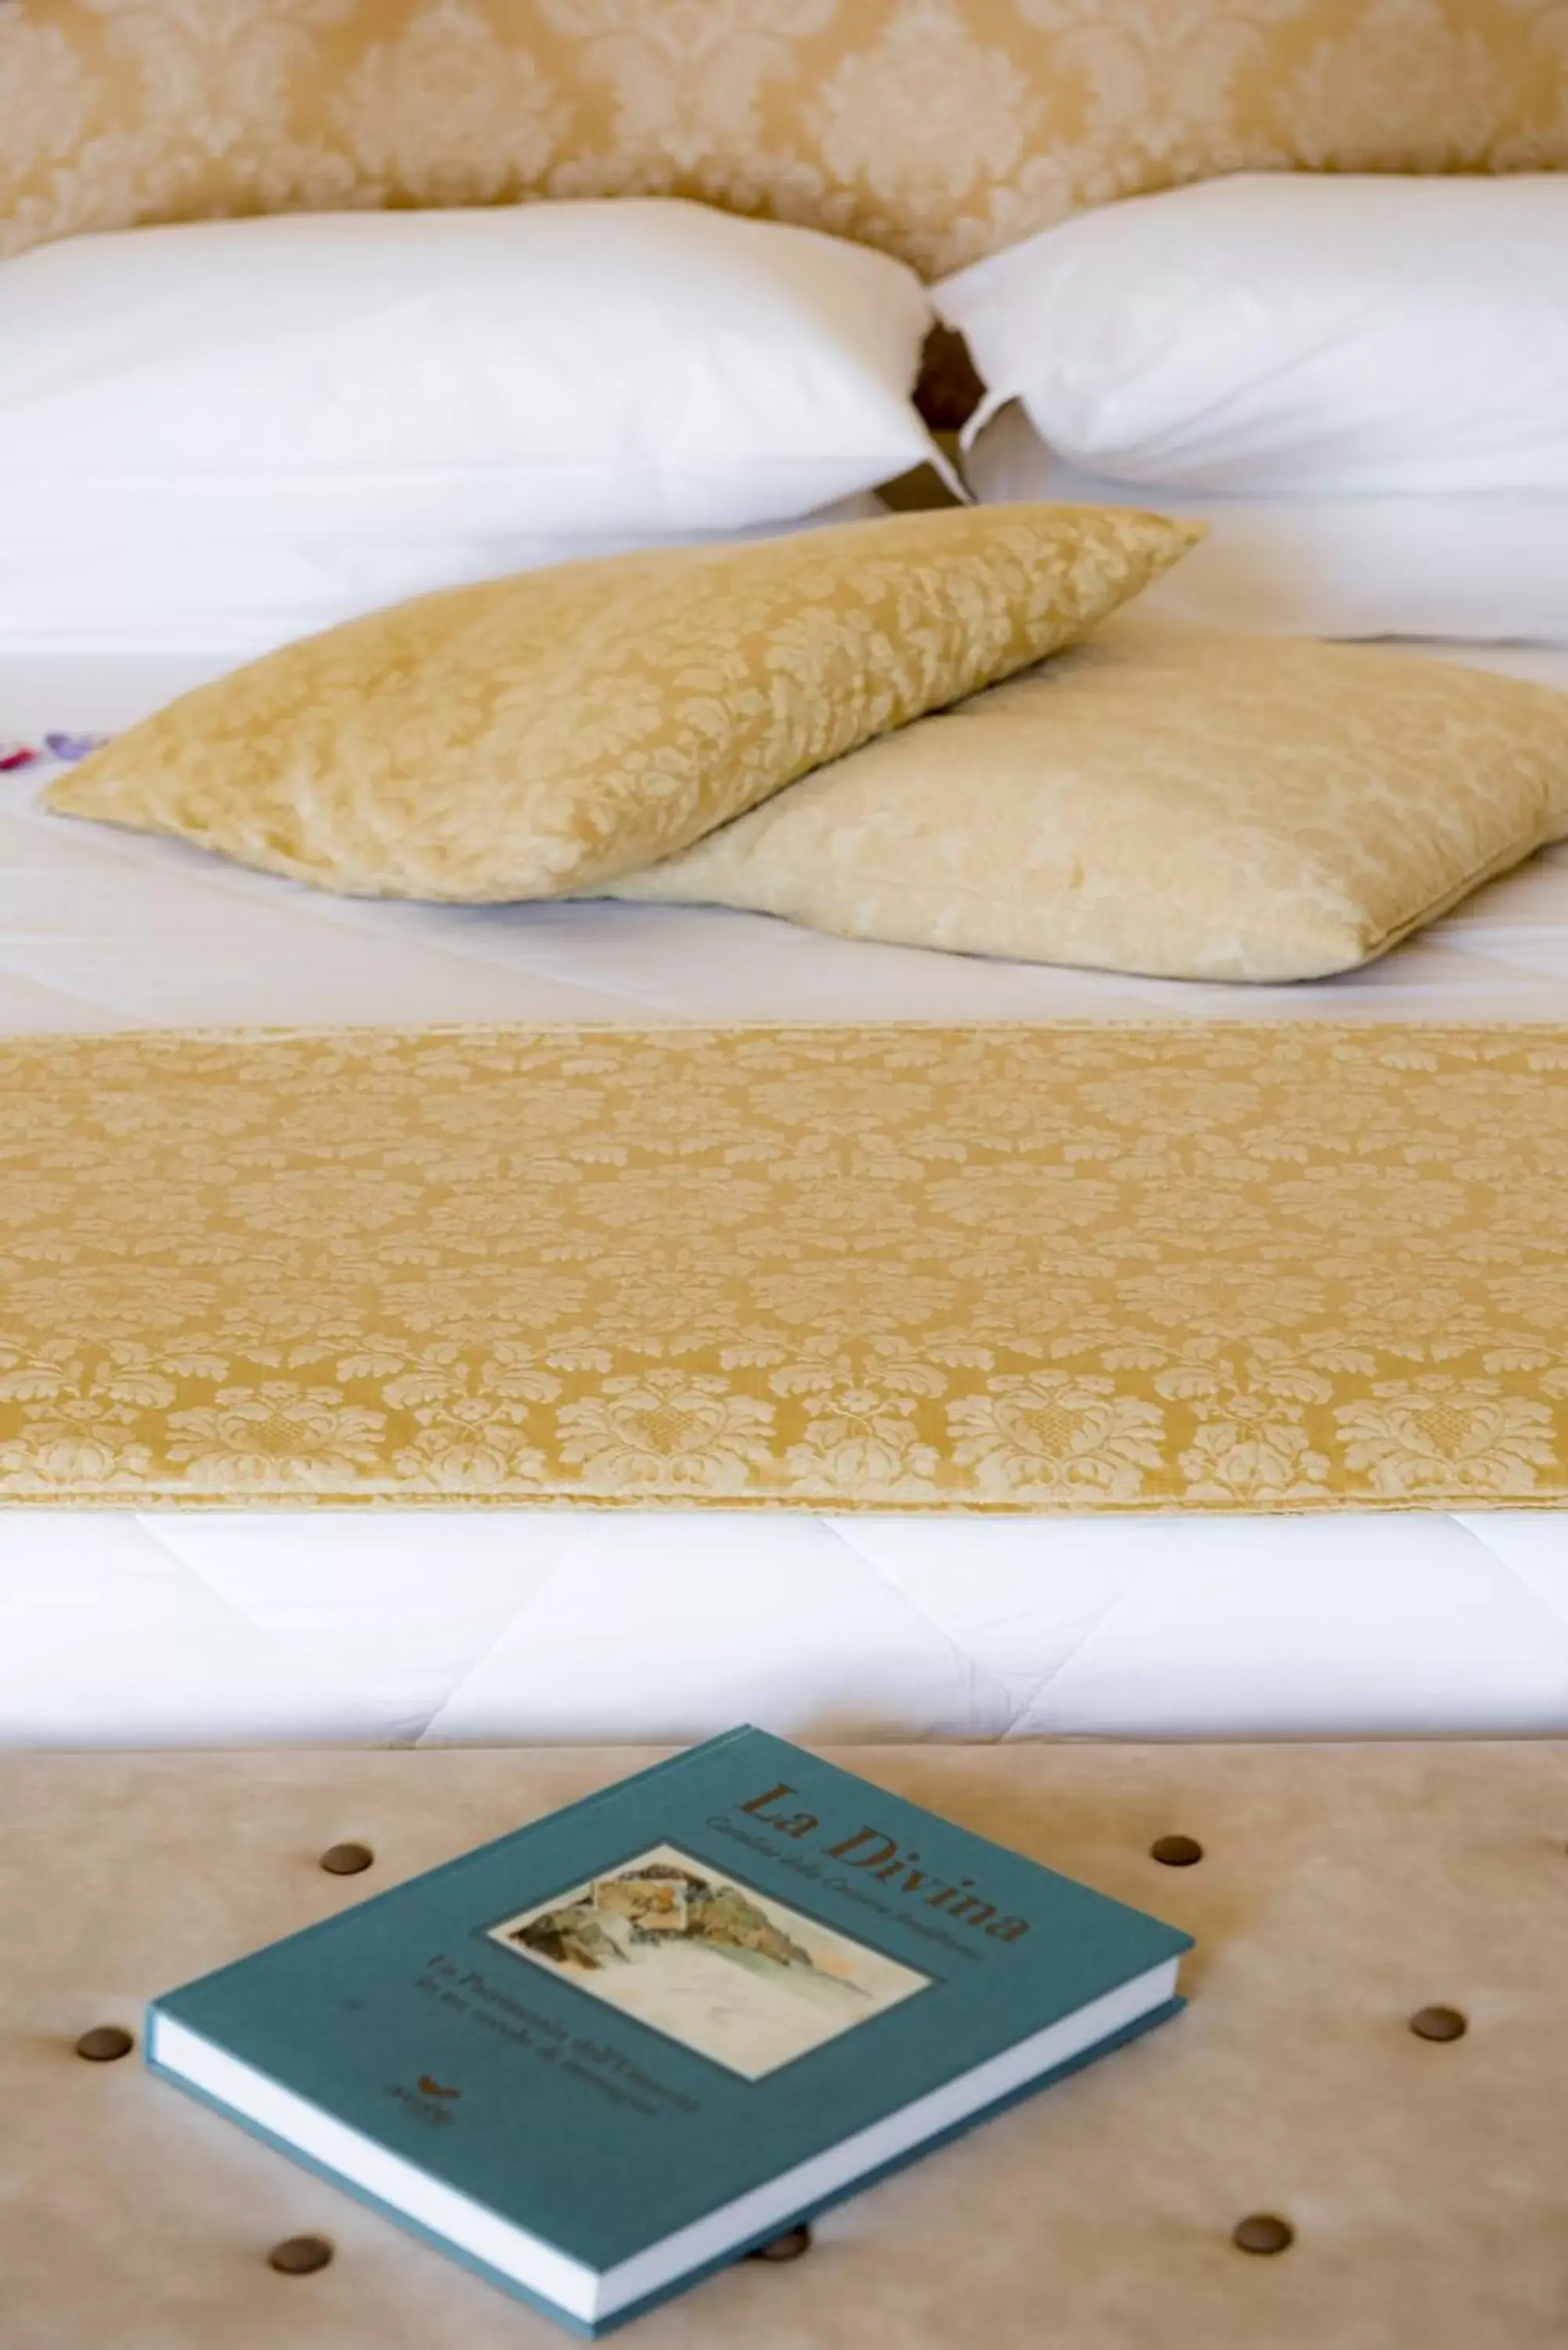 Bed in Hotel Margherita